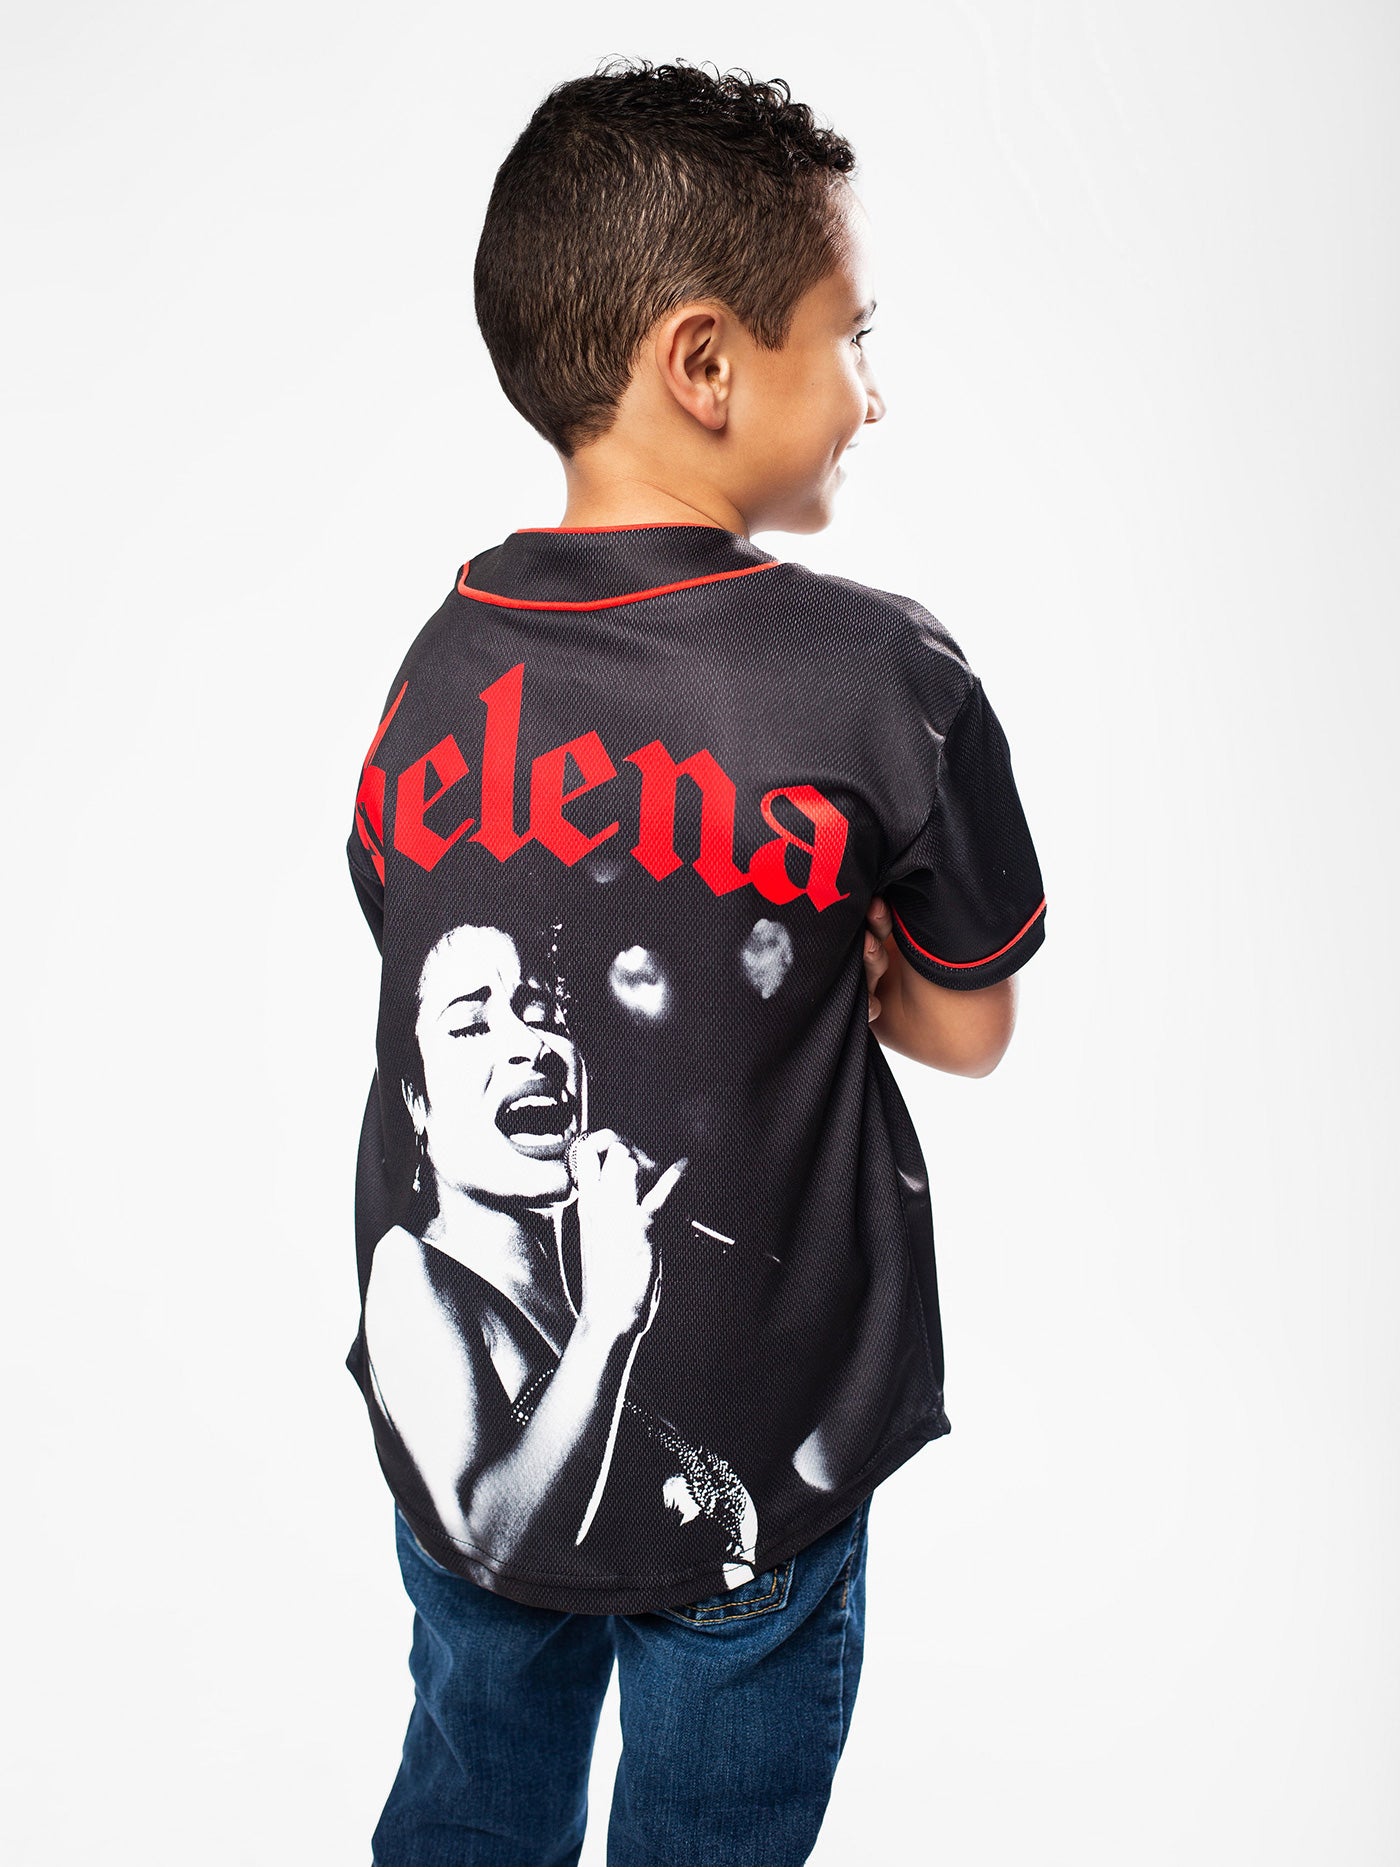 YOUTH: Selena Graphic Black Baseball Jersey